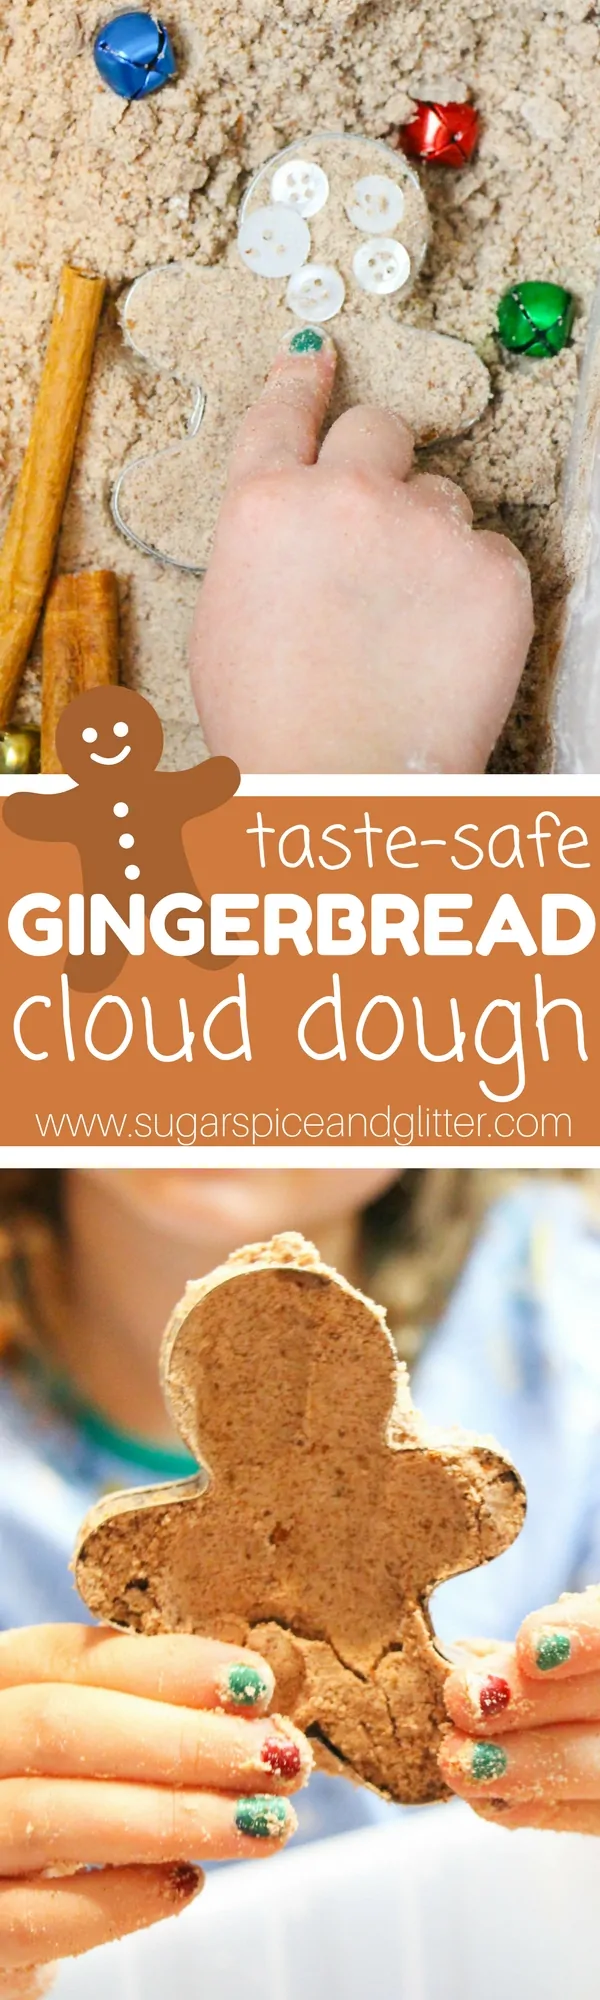 Gingerbread Cloud Dough